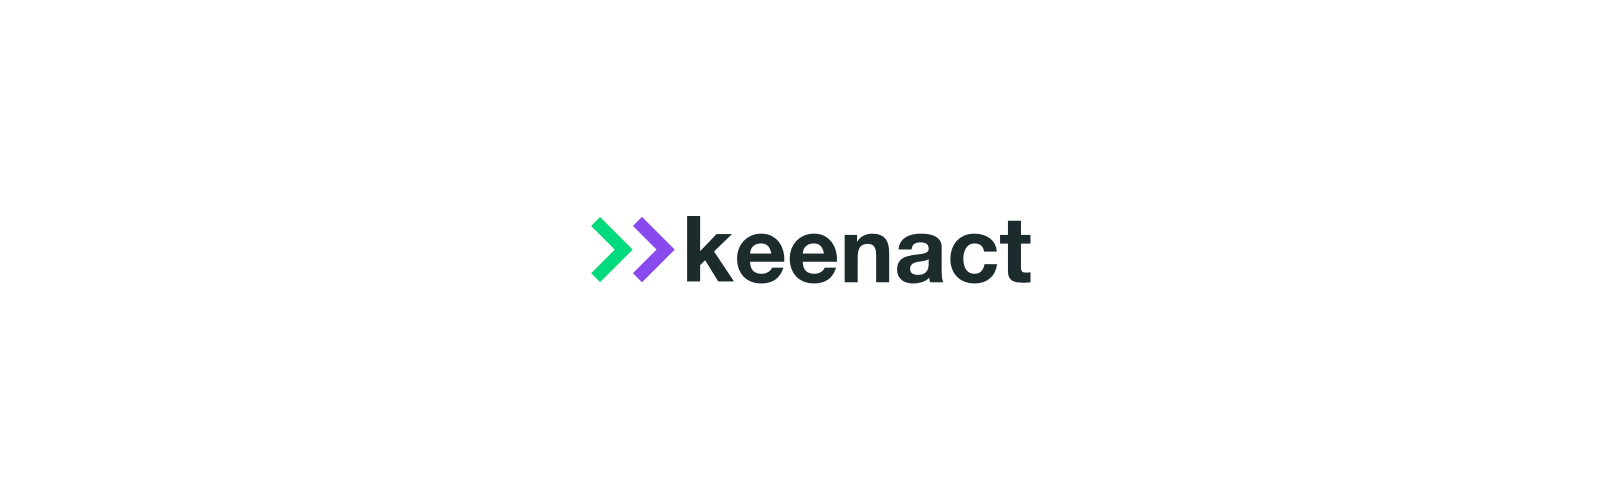 keenact-logo